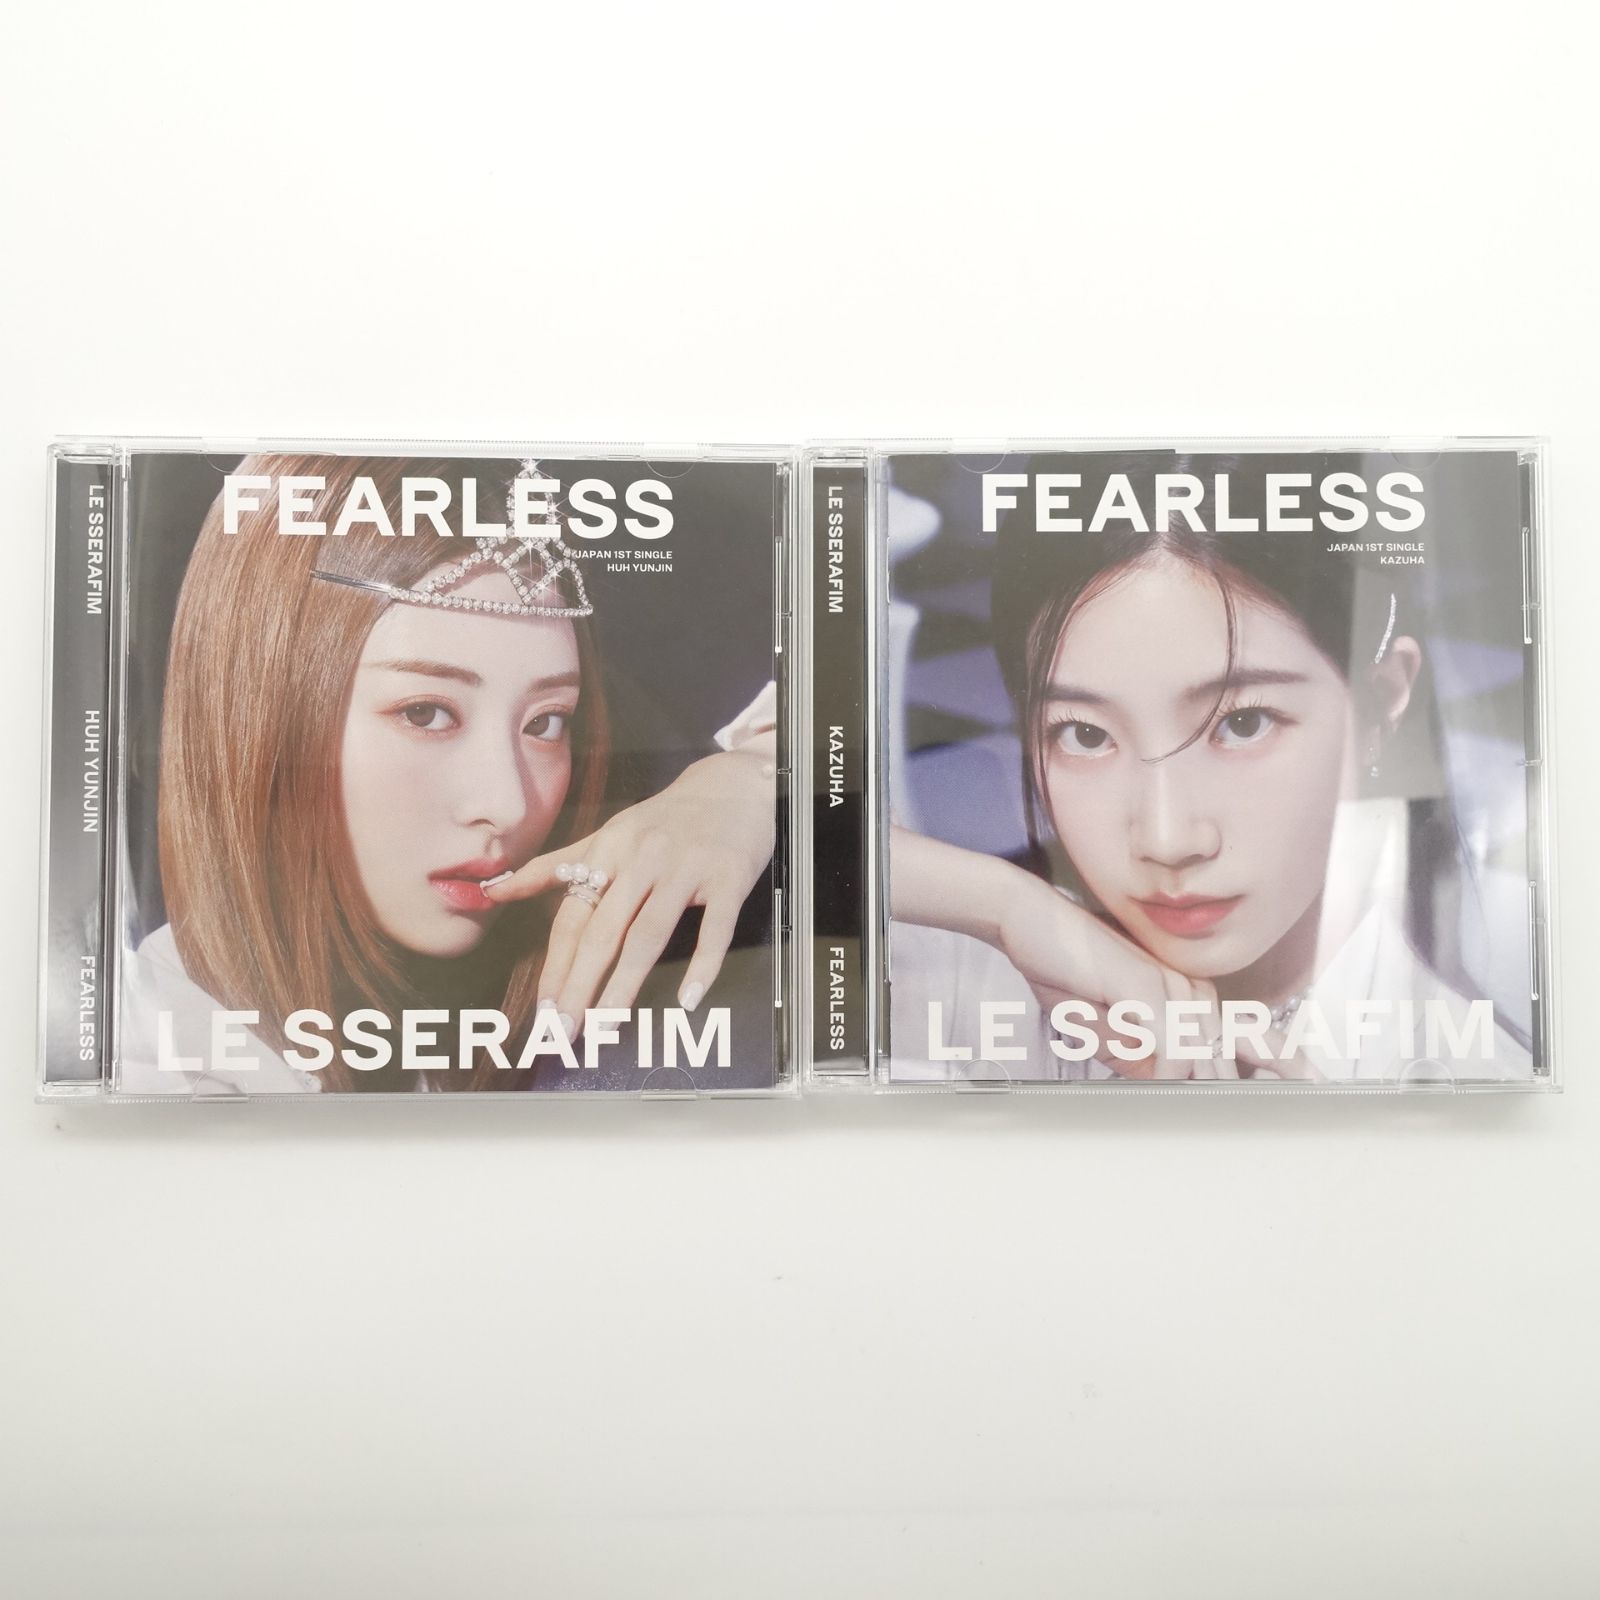 LE SSERAFIM FEARLESS CD 2枚セット ユンジン カズホ JAPAN 1ST SINGLE 